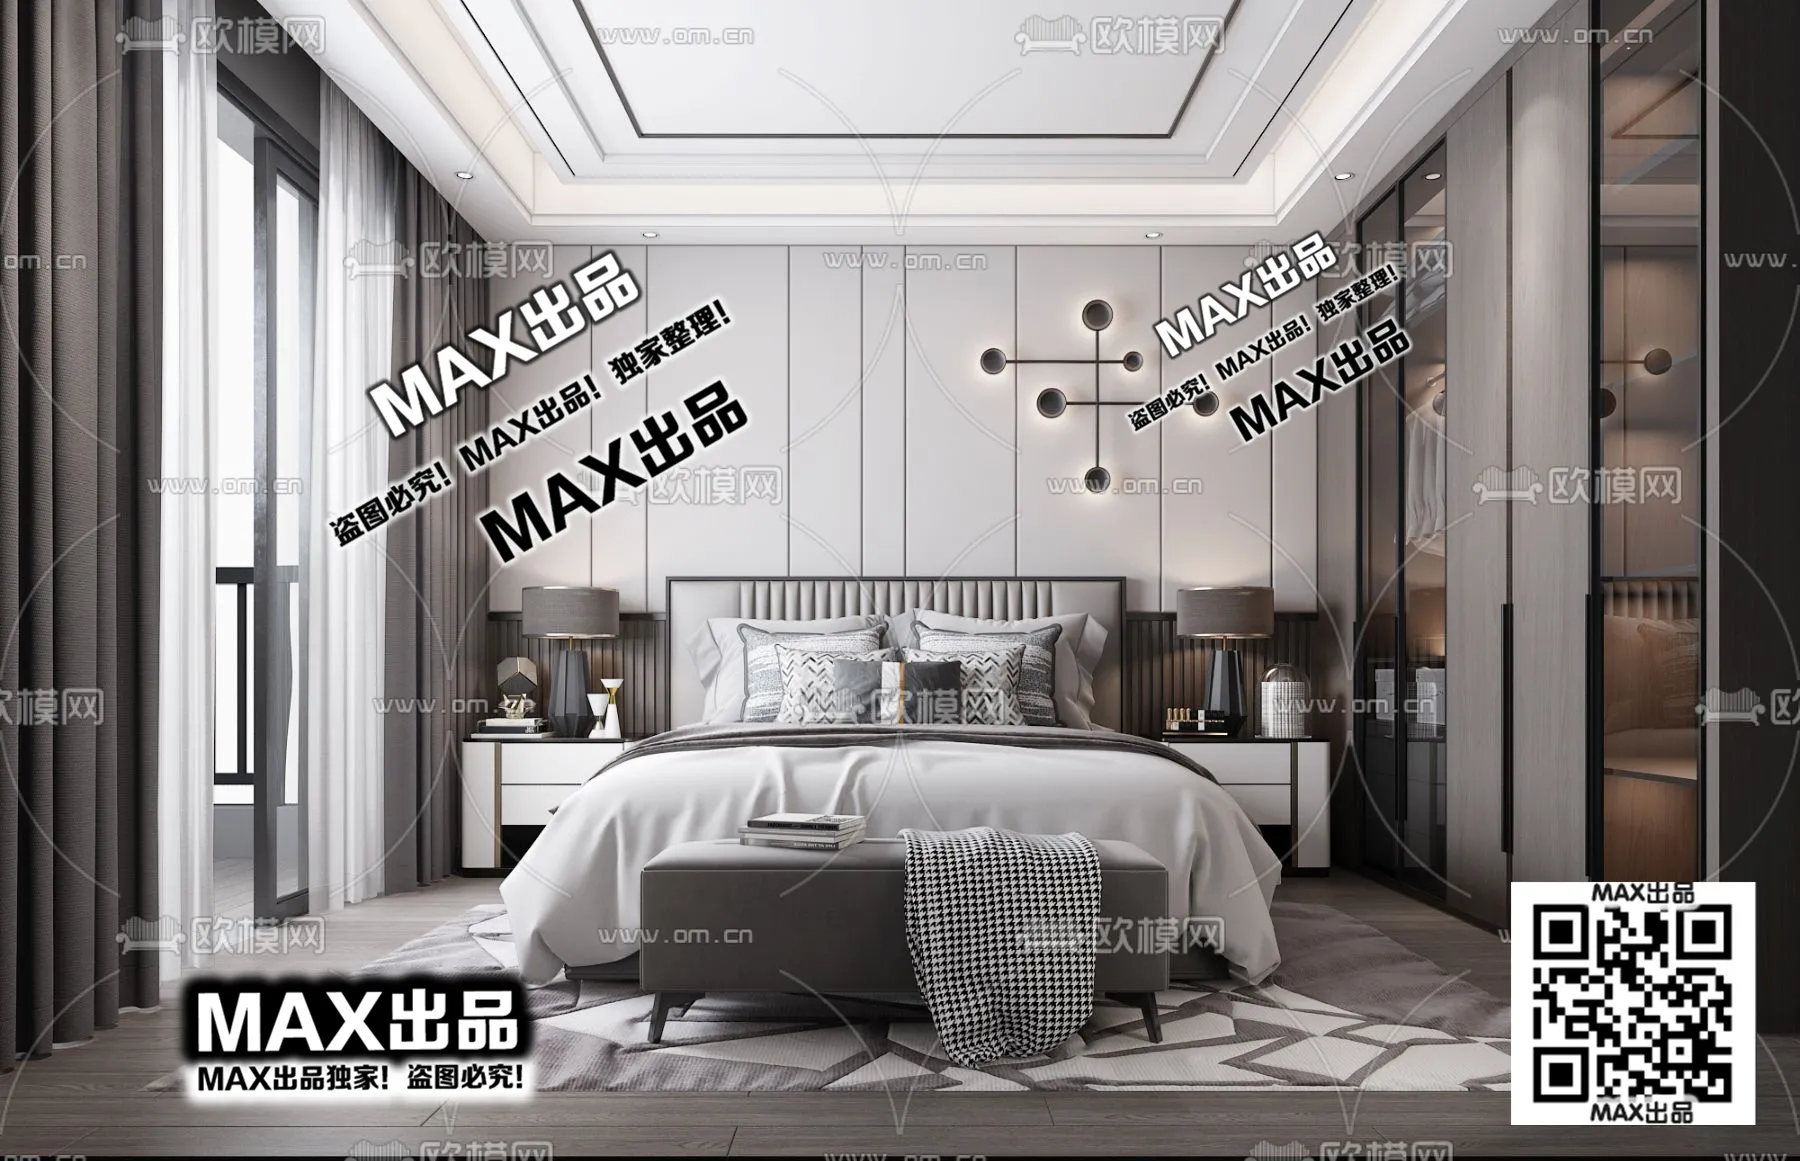 3DS MAX SCENES – LIVING ROOM – 028